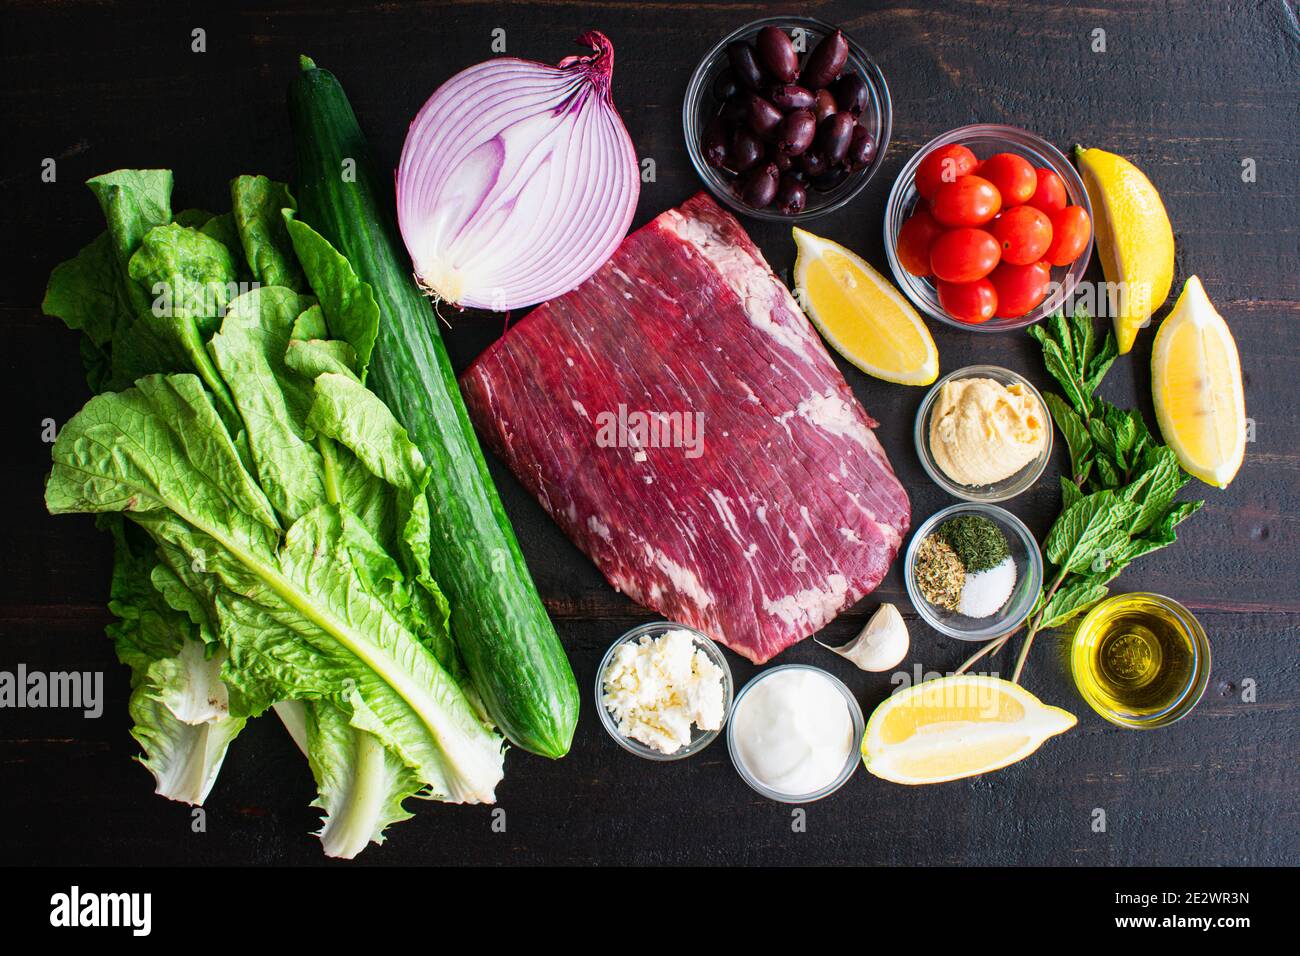 Mediterranean Steak Bowl Ingredients: Raw flank steak, fruit, vegetables, and herbs used to make salad on a dark wood background Stock Photo